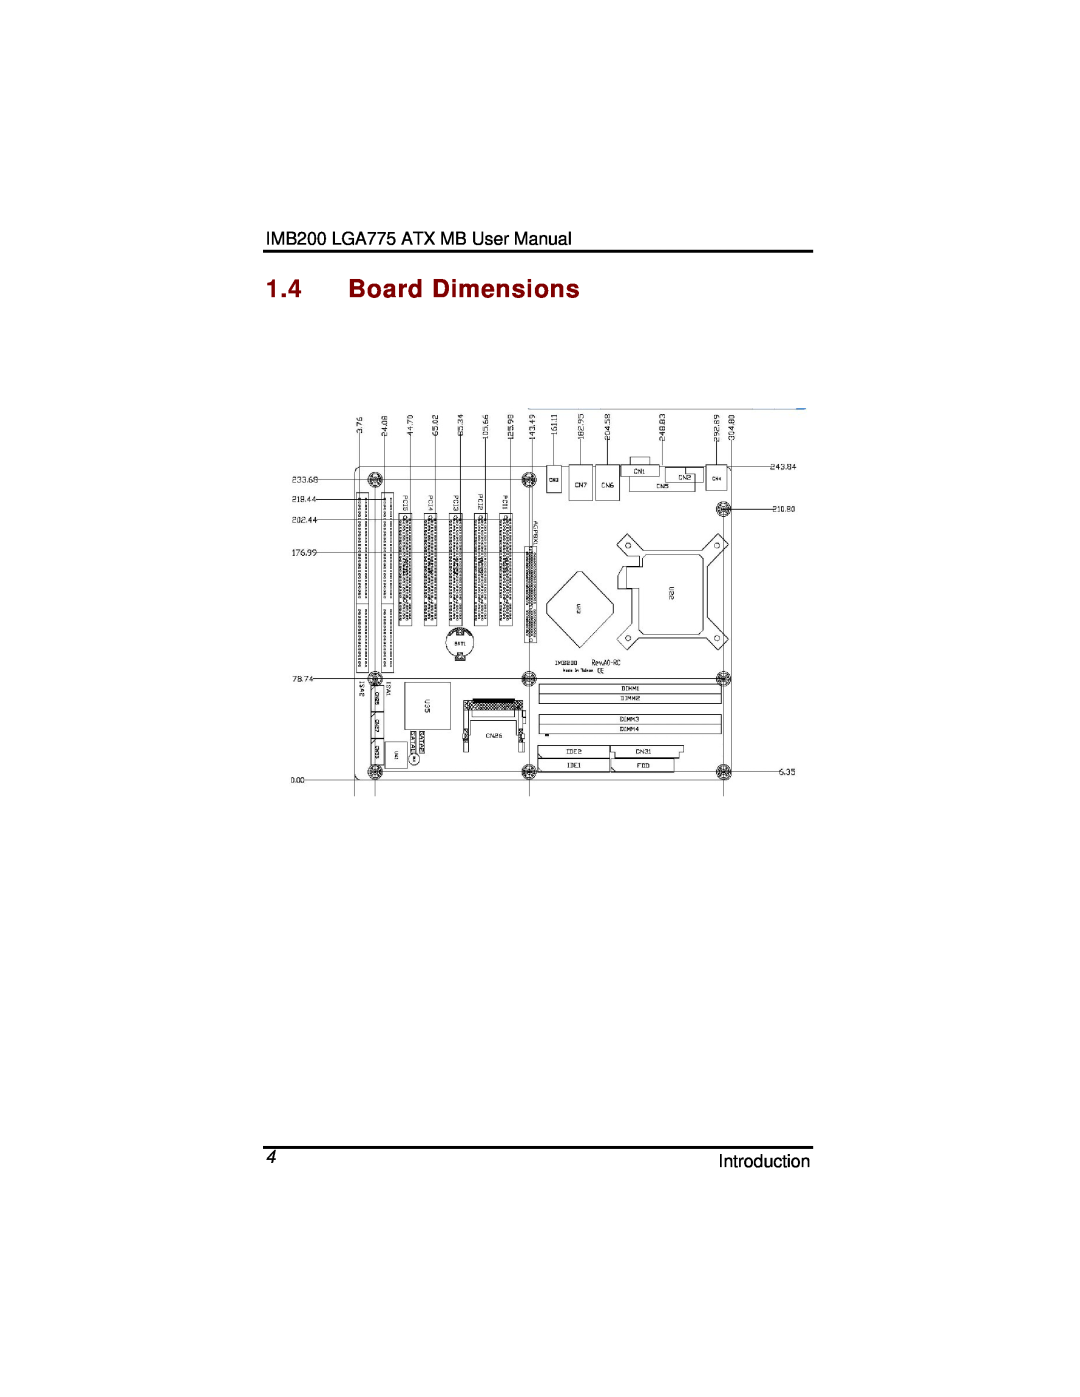 Intel IMB200VGE user manual Board Dimensions, IMB200 LGA775 ATX MB User Manual, Introduction 